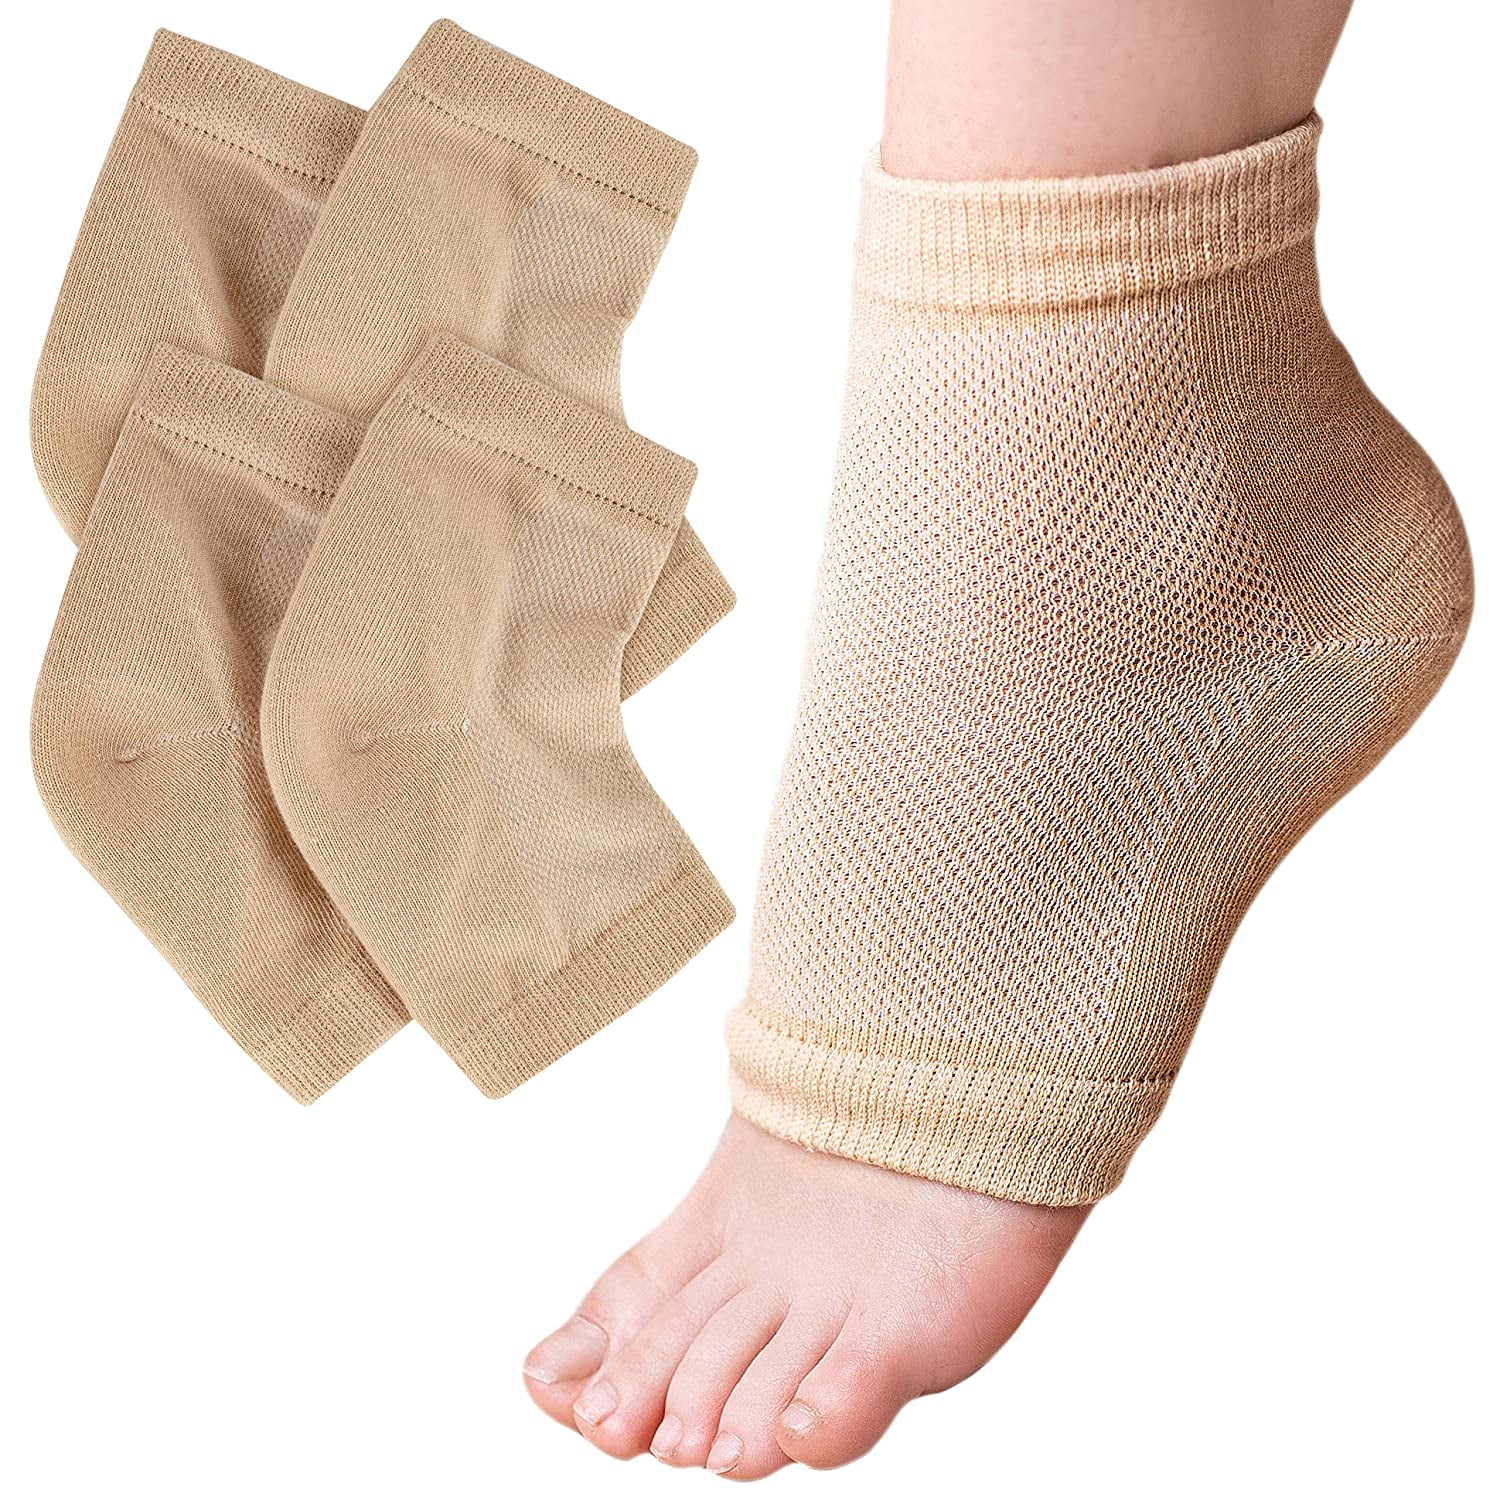 Moisturizing Socks, Lotion Gel for Dry Cracked Heels, Spa Gel Socks  Humectant Moisturizer Heel Balm Foot Treatment Care Heel Softener  Compression 2 Pairs-Pink+Grey 